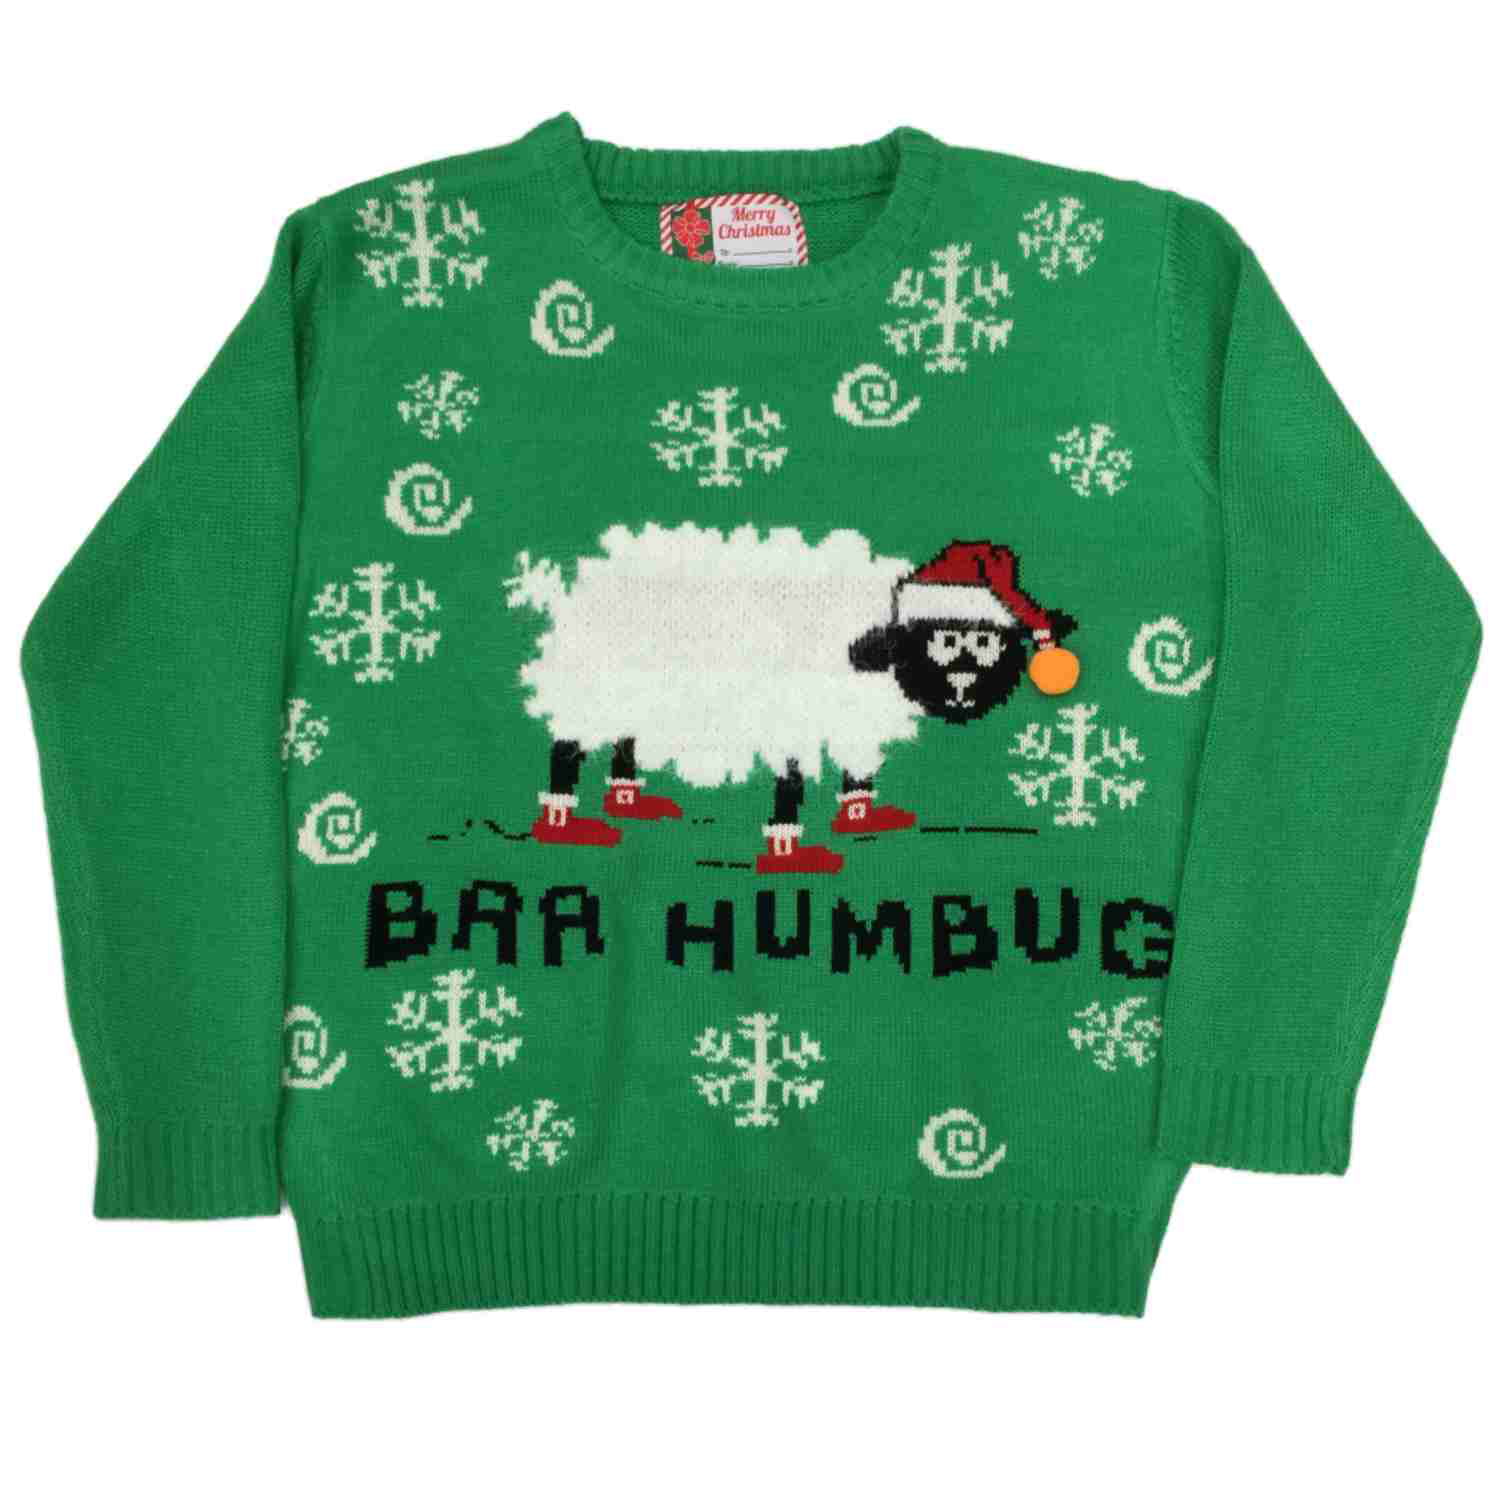 FUNNY Adulto Stampati Festive Natale T-Shirt-Pecore Baa Humbug 